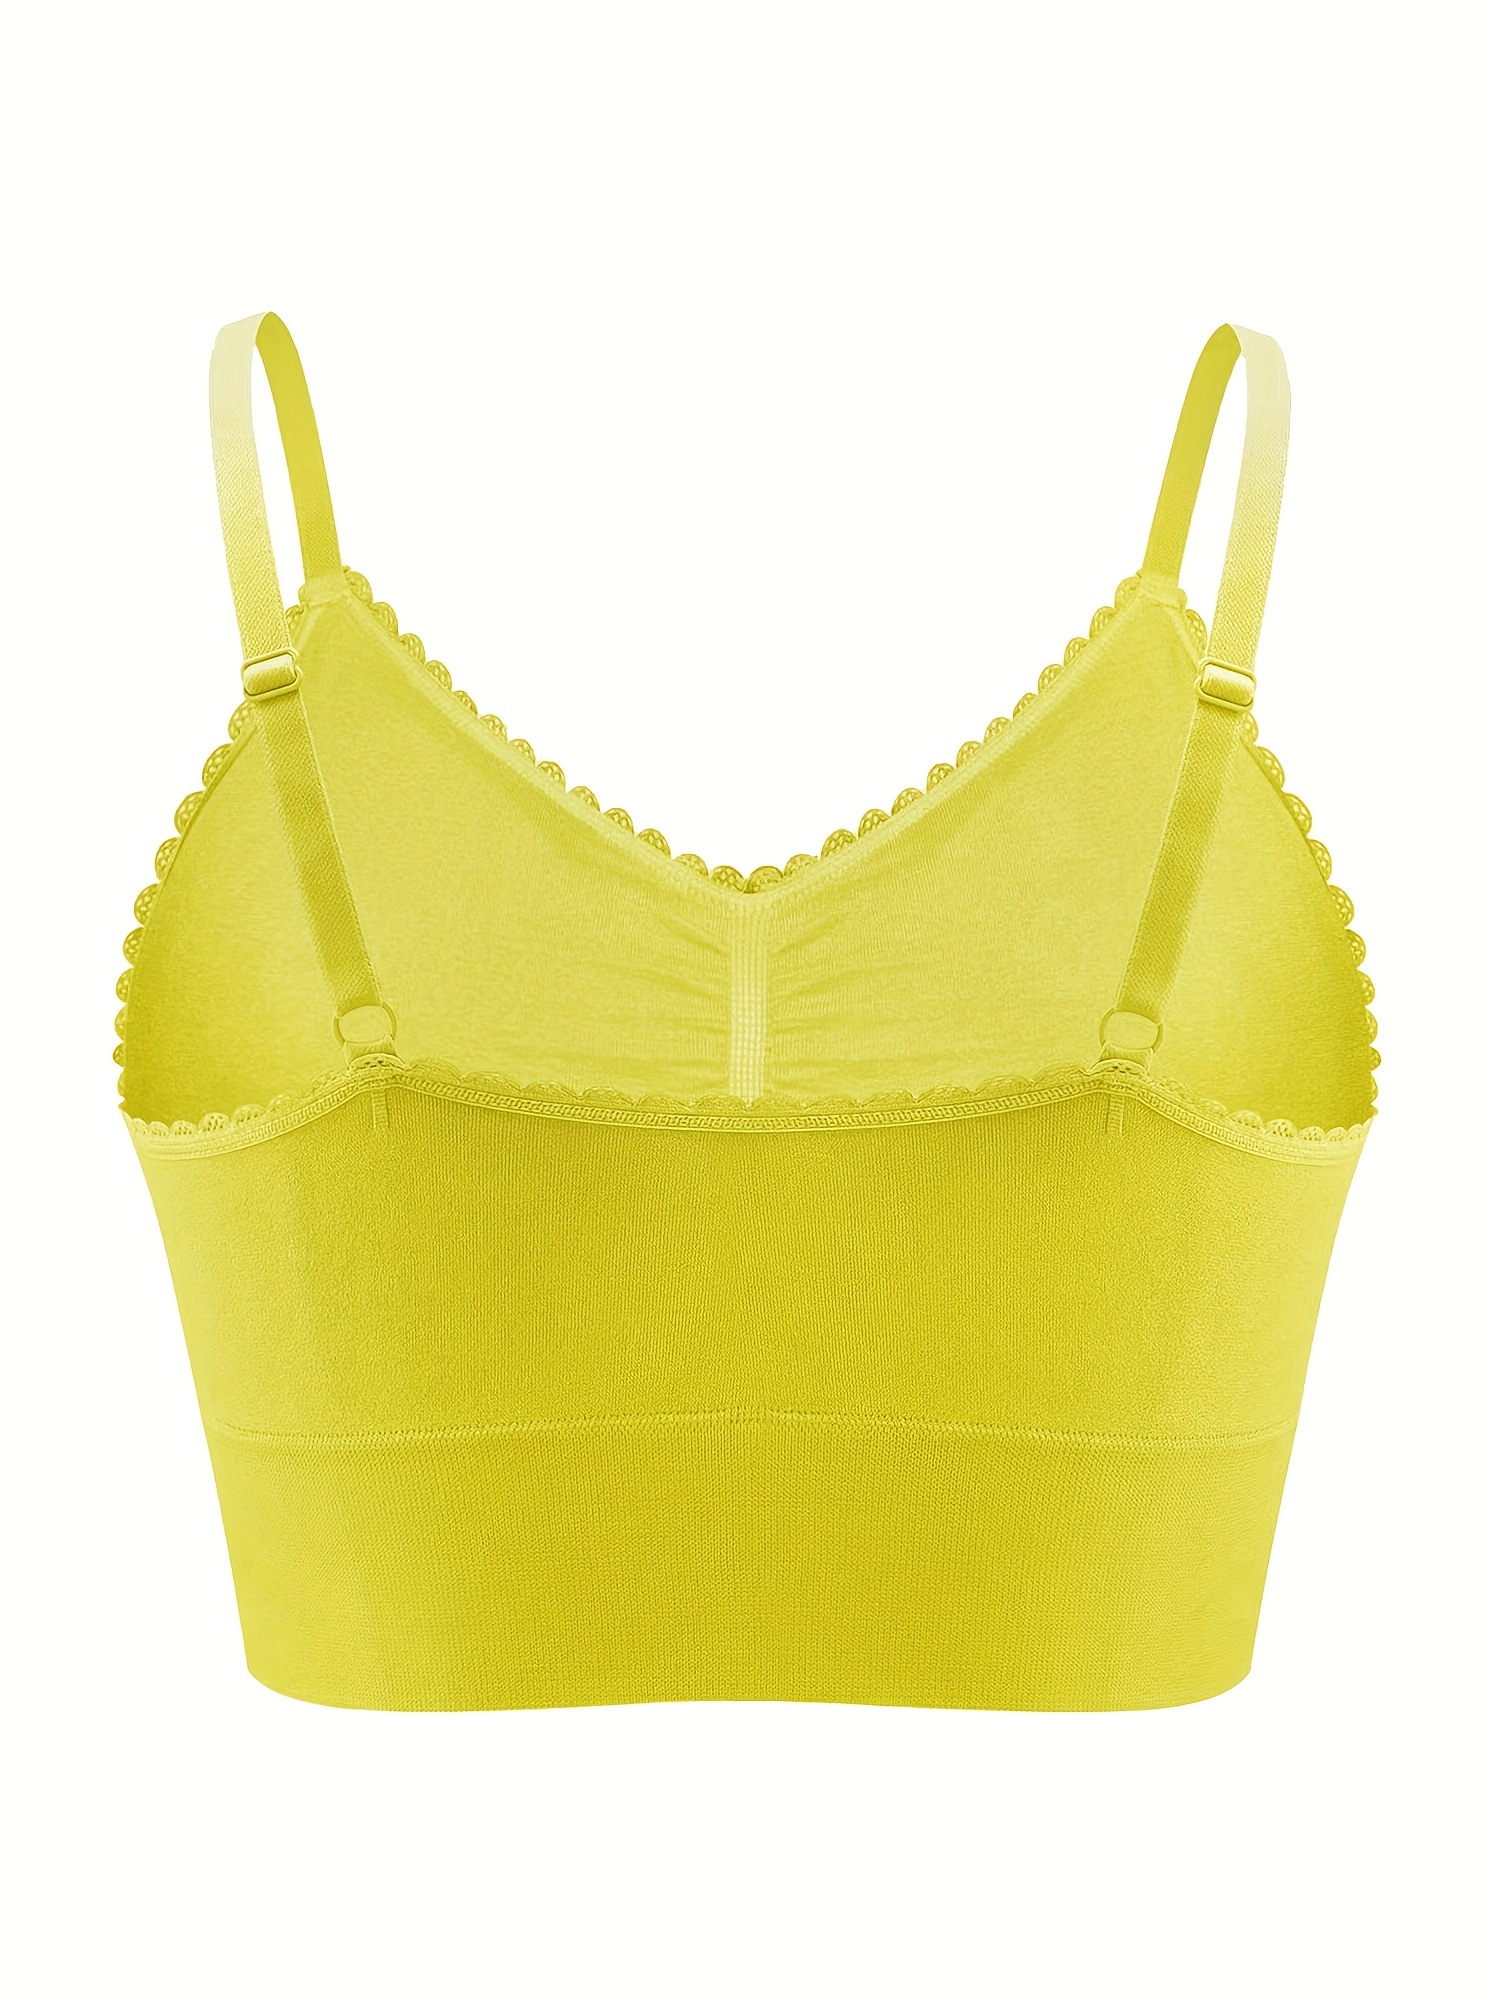 Buy Yellow Bras for Women by Bodycare Online